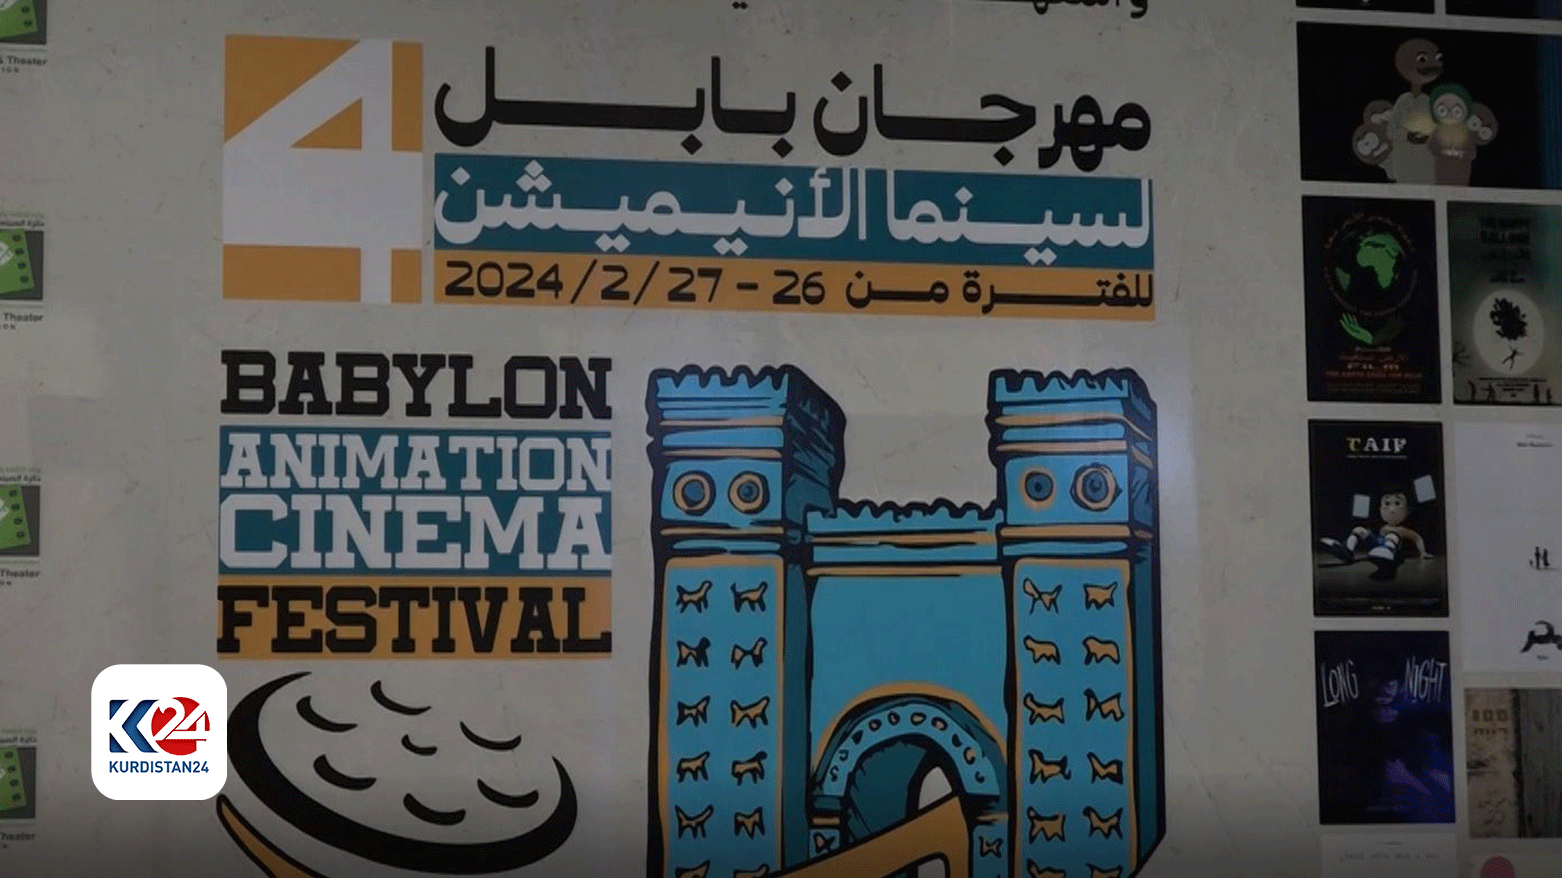 The logo of the fourth Babylon Animation Cinema Festival. (Photo: Submitted to Kurdistan24)